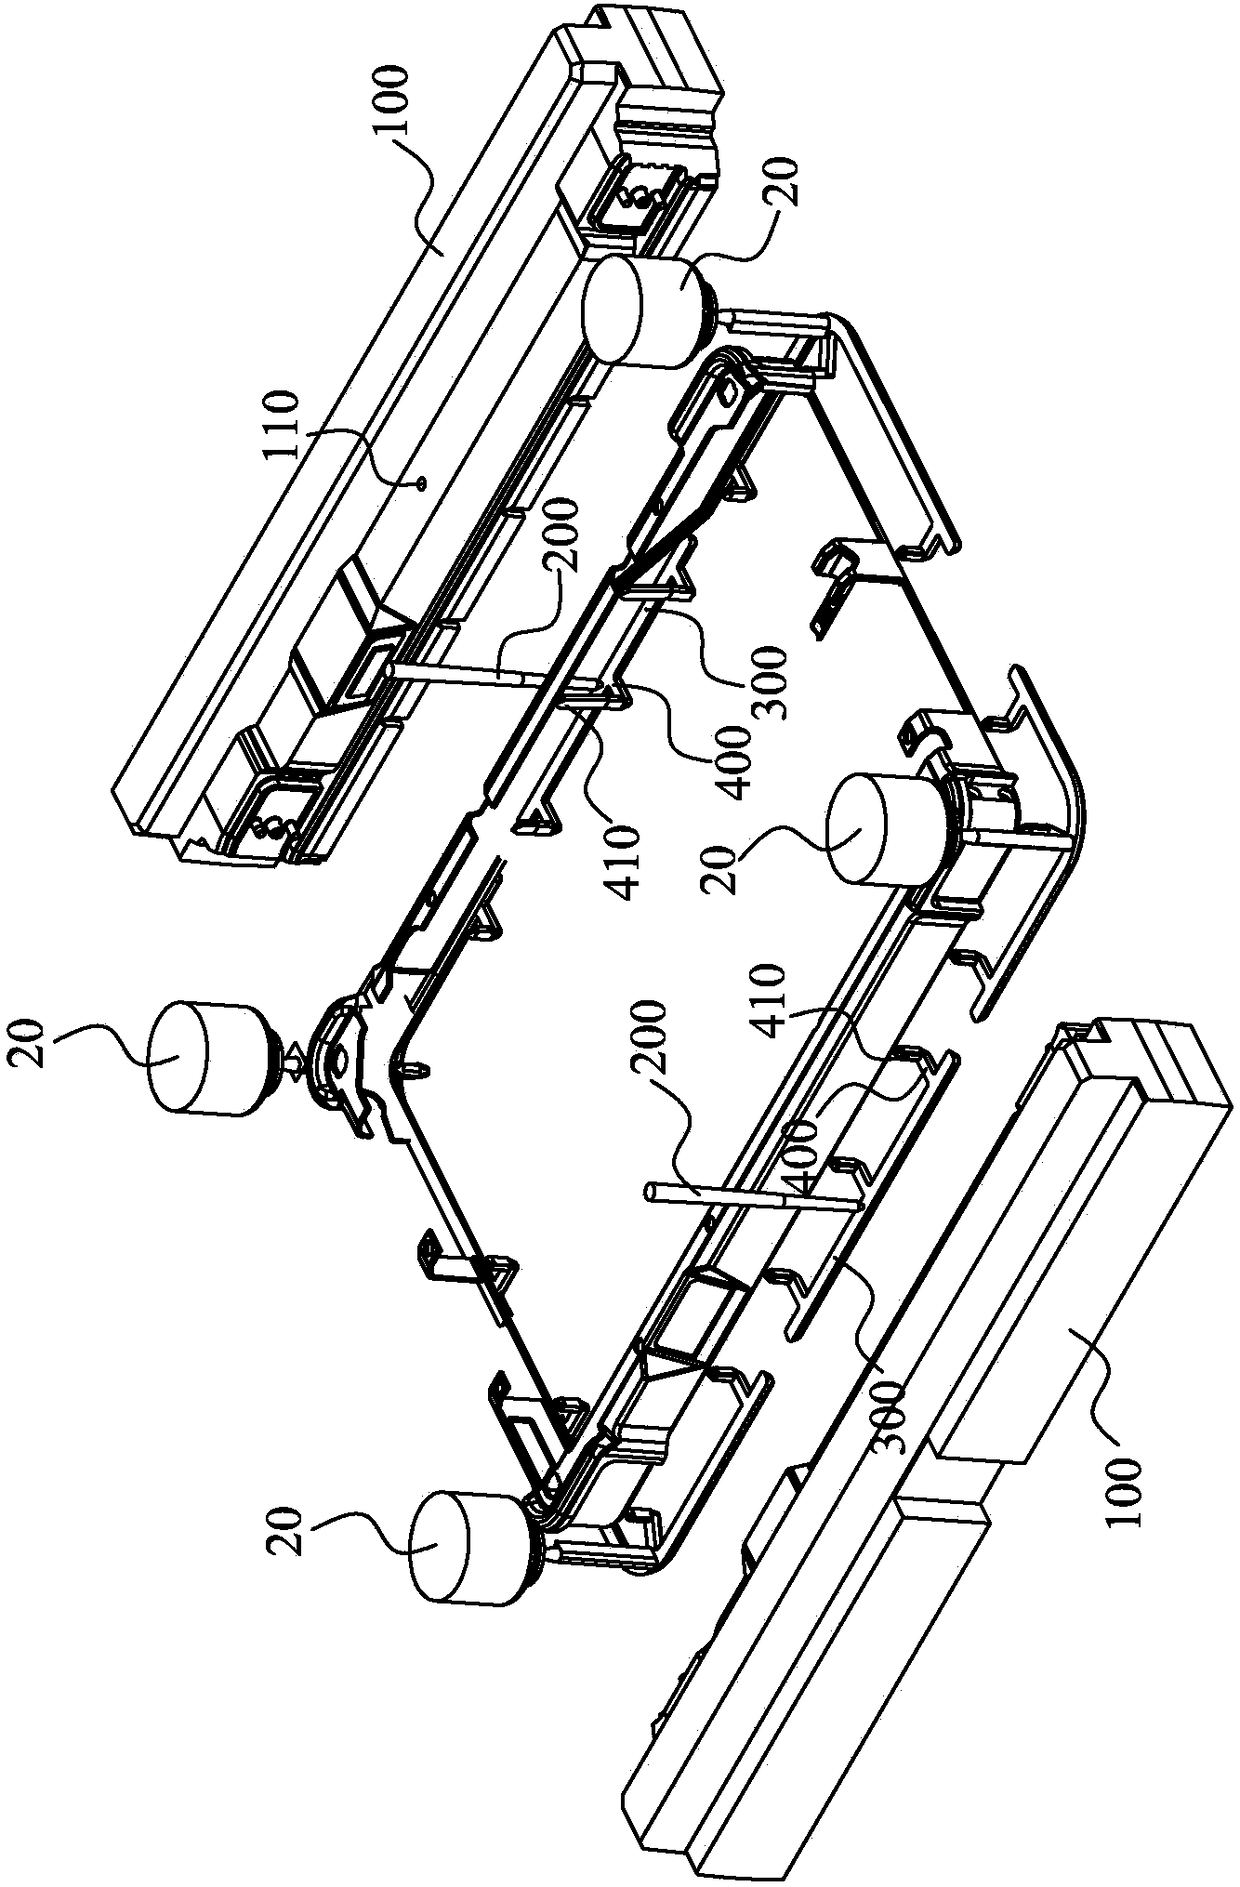 Slide block plastic injection structure